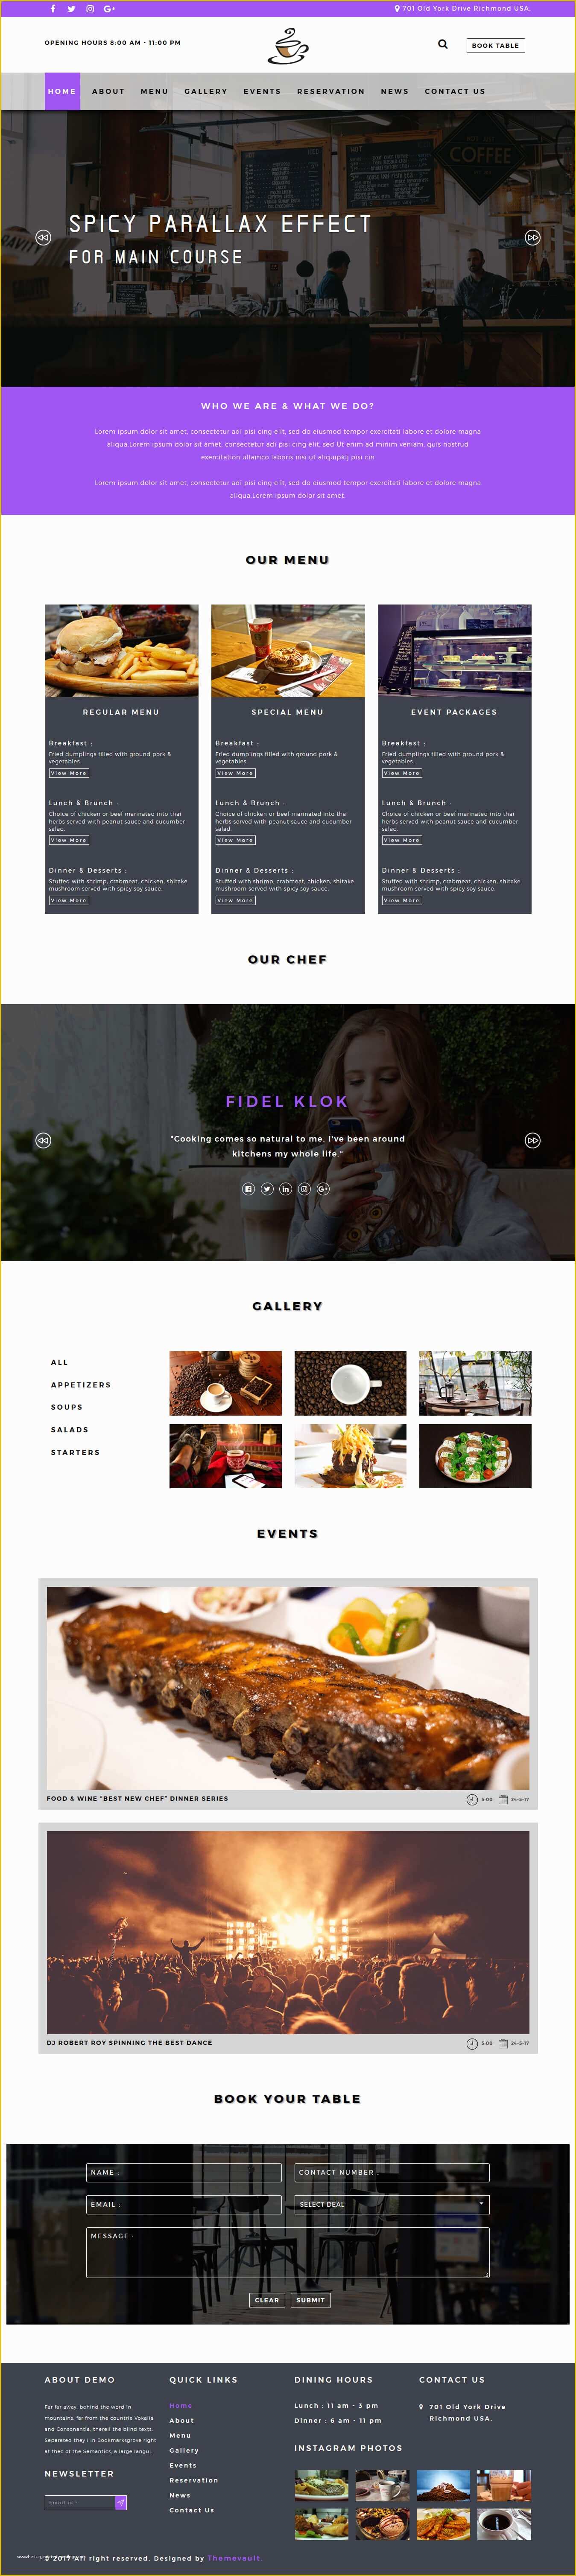 Coffee Shop Website Template Free Of Kafe – Responsive Free Coffee Shop Website Template